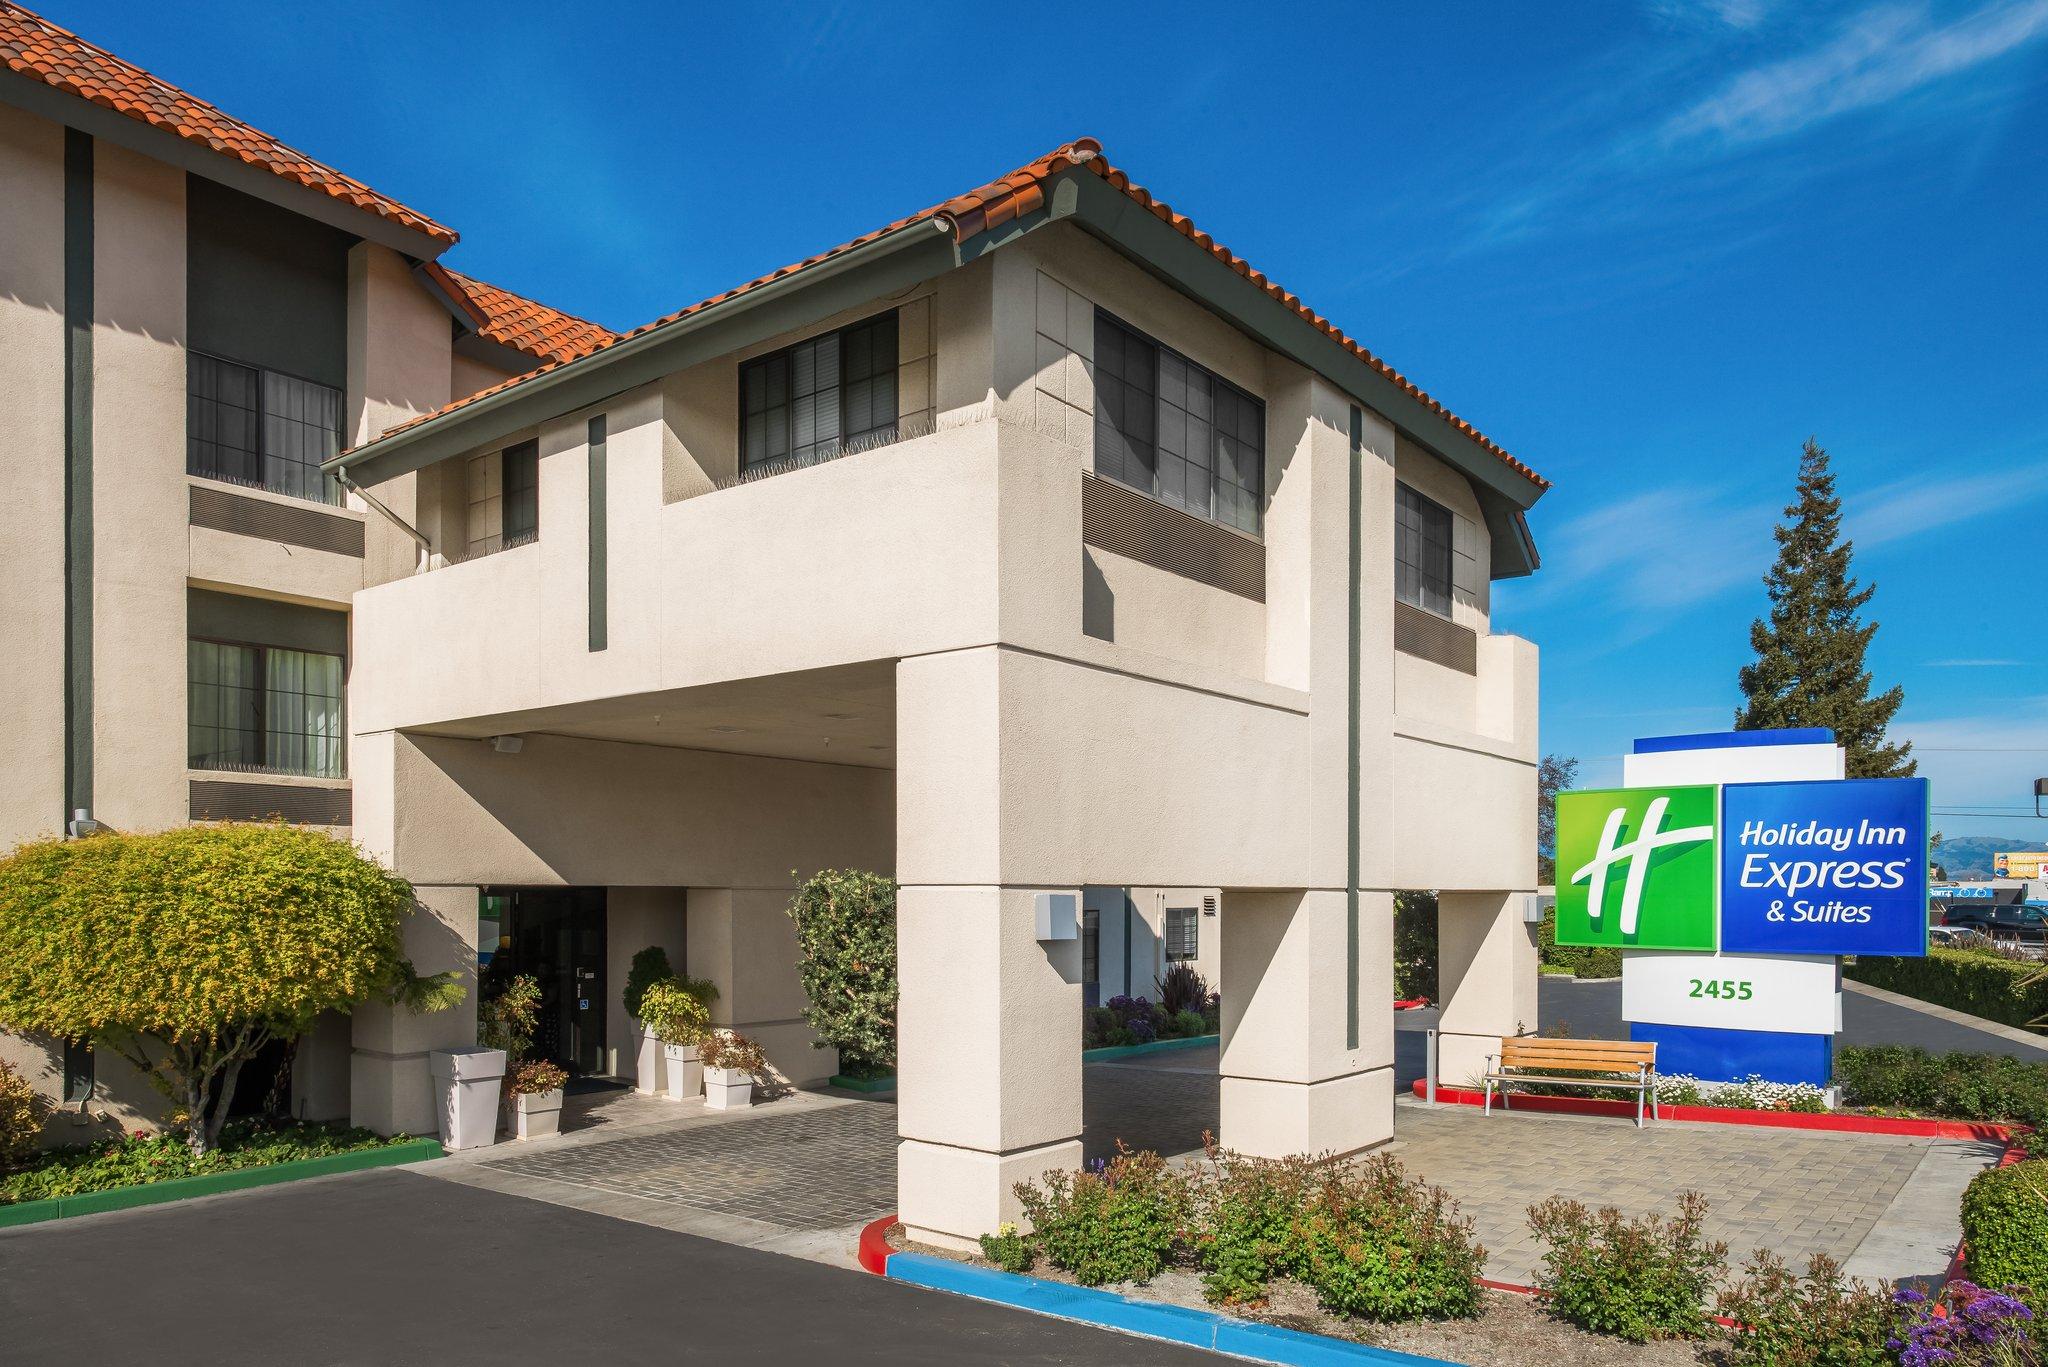 Holiday Inn Express & Suites Santa Clara - Silicon Valley in Santa Clara, CA